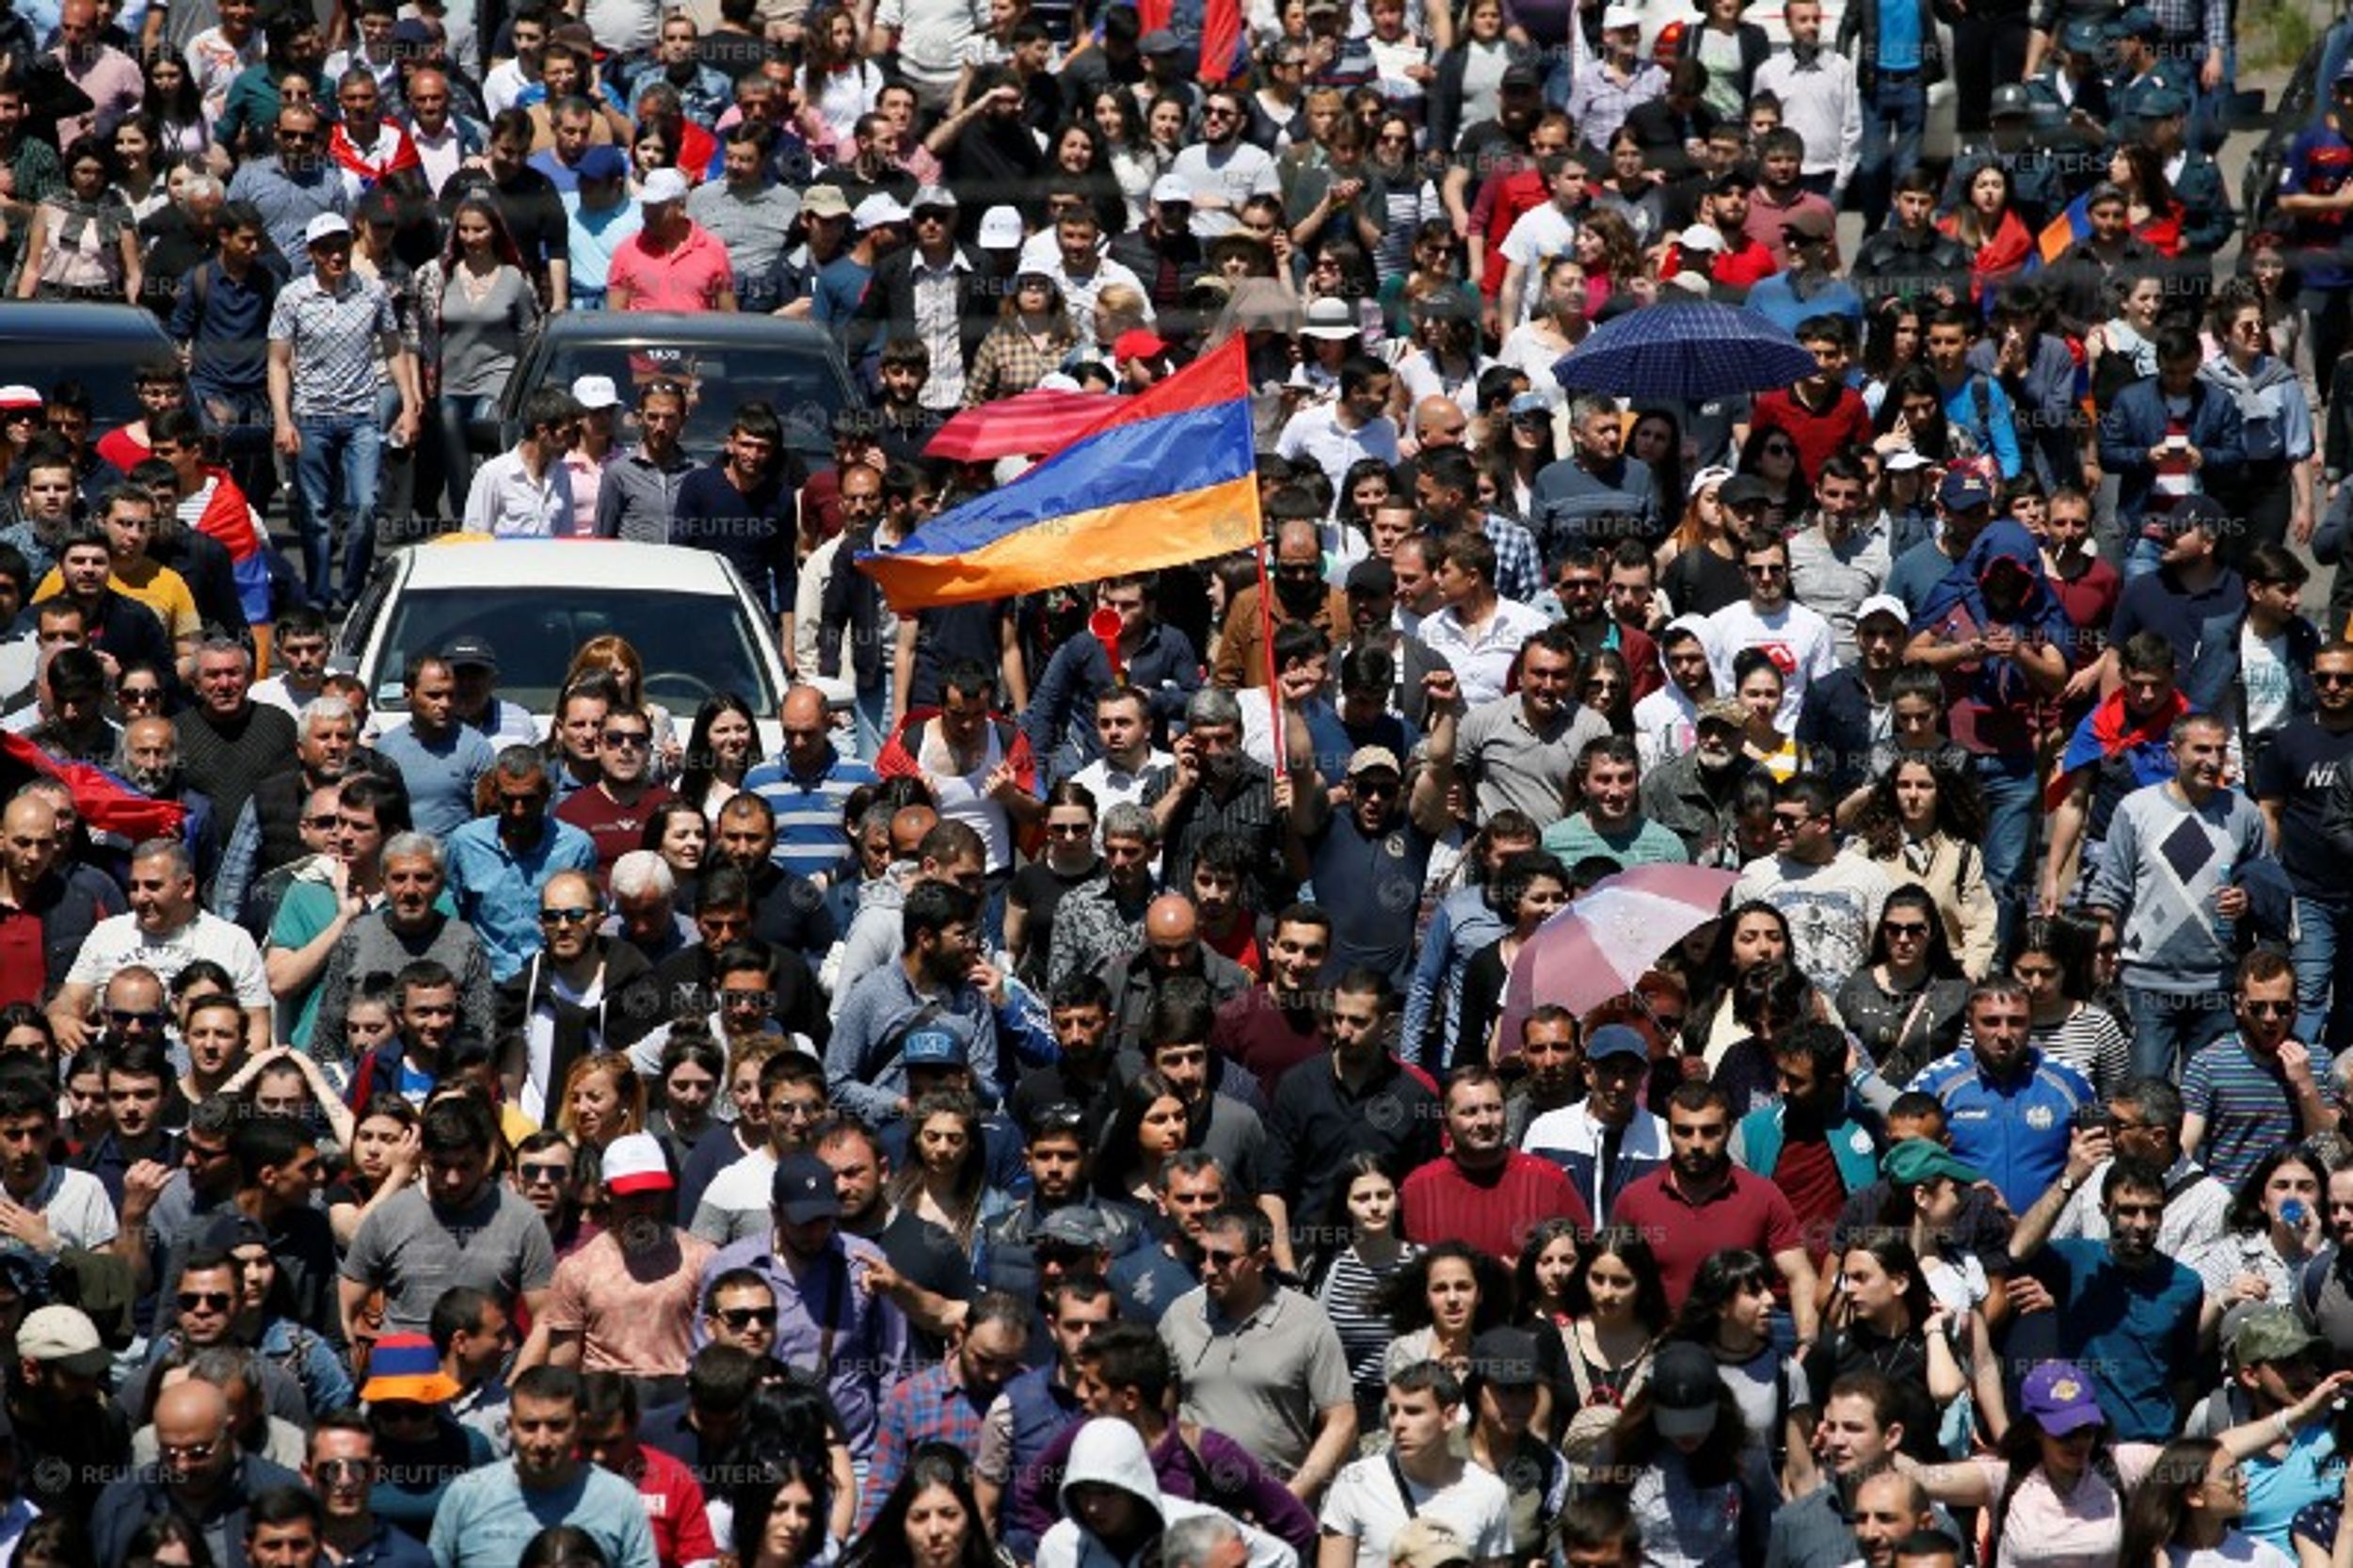 Armenia's Revolution